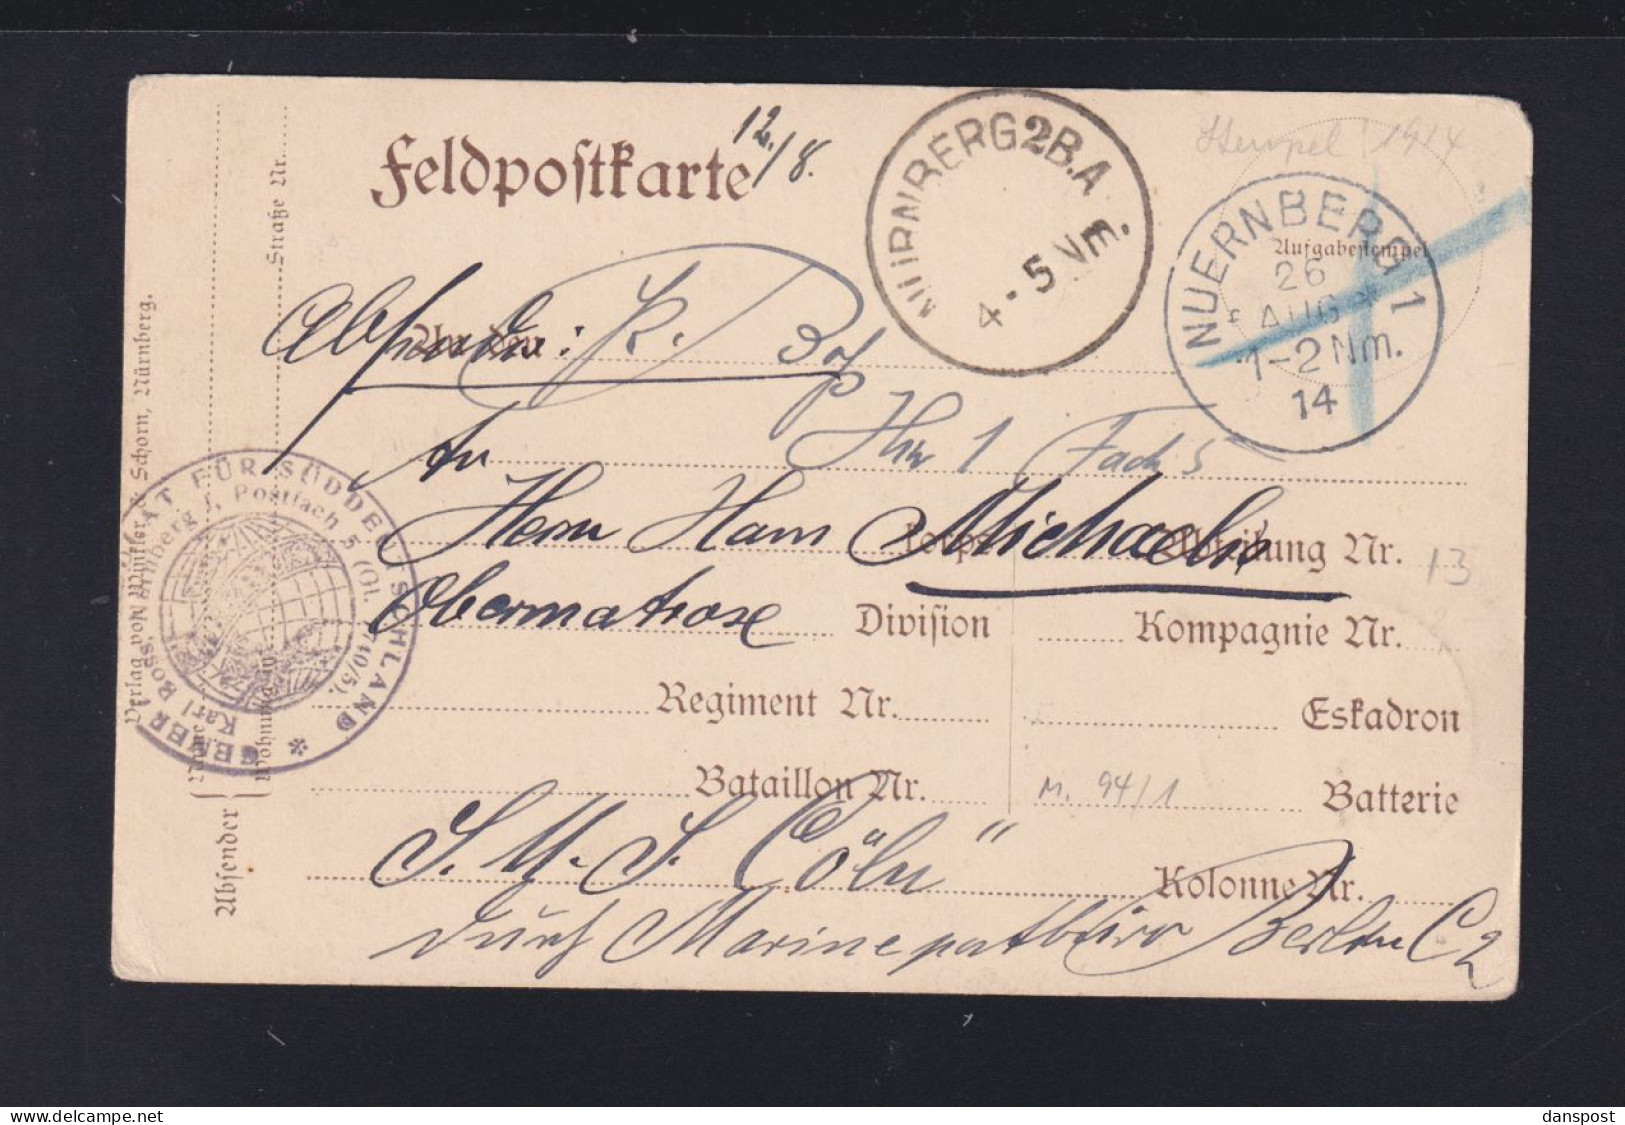 Bayern AK Nürnberg 1914 An SMS Köln - Covers & Documents